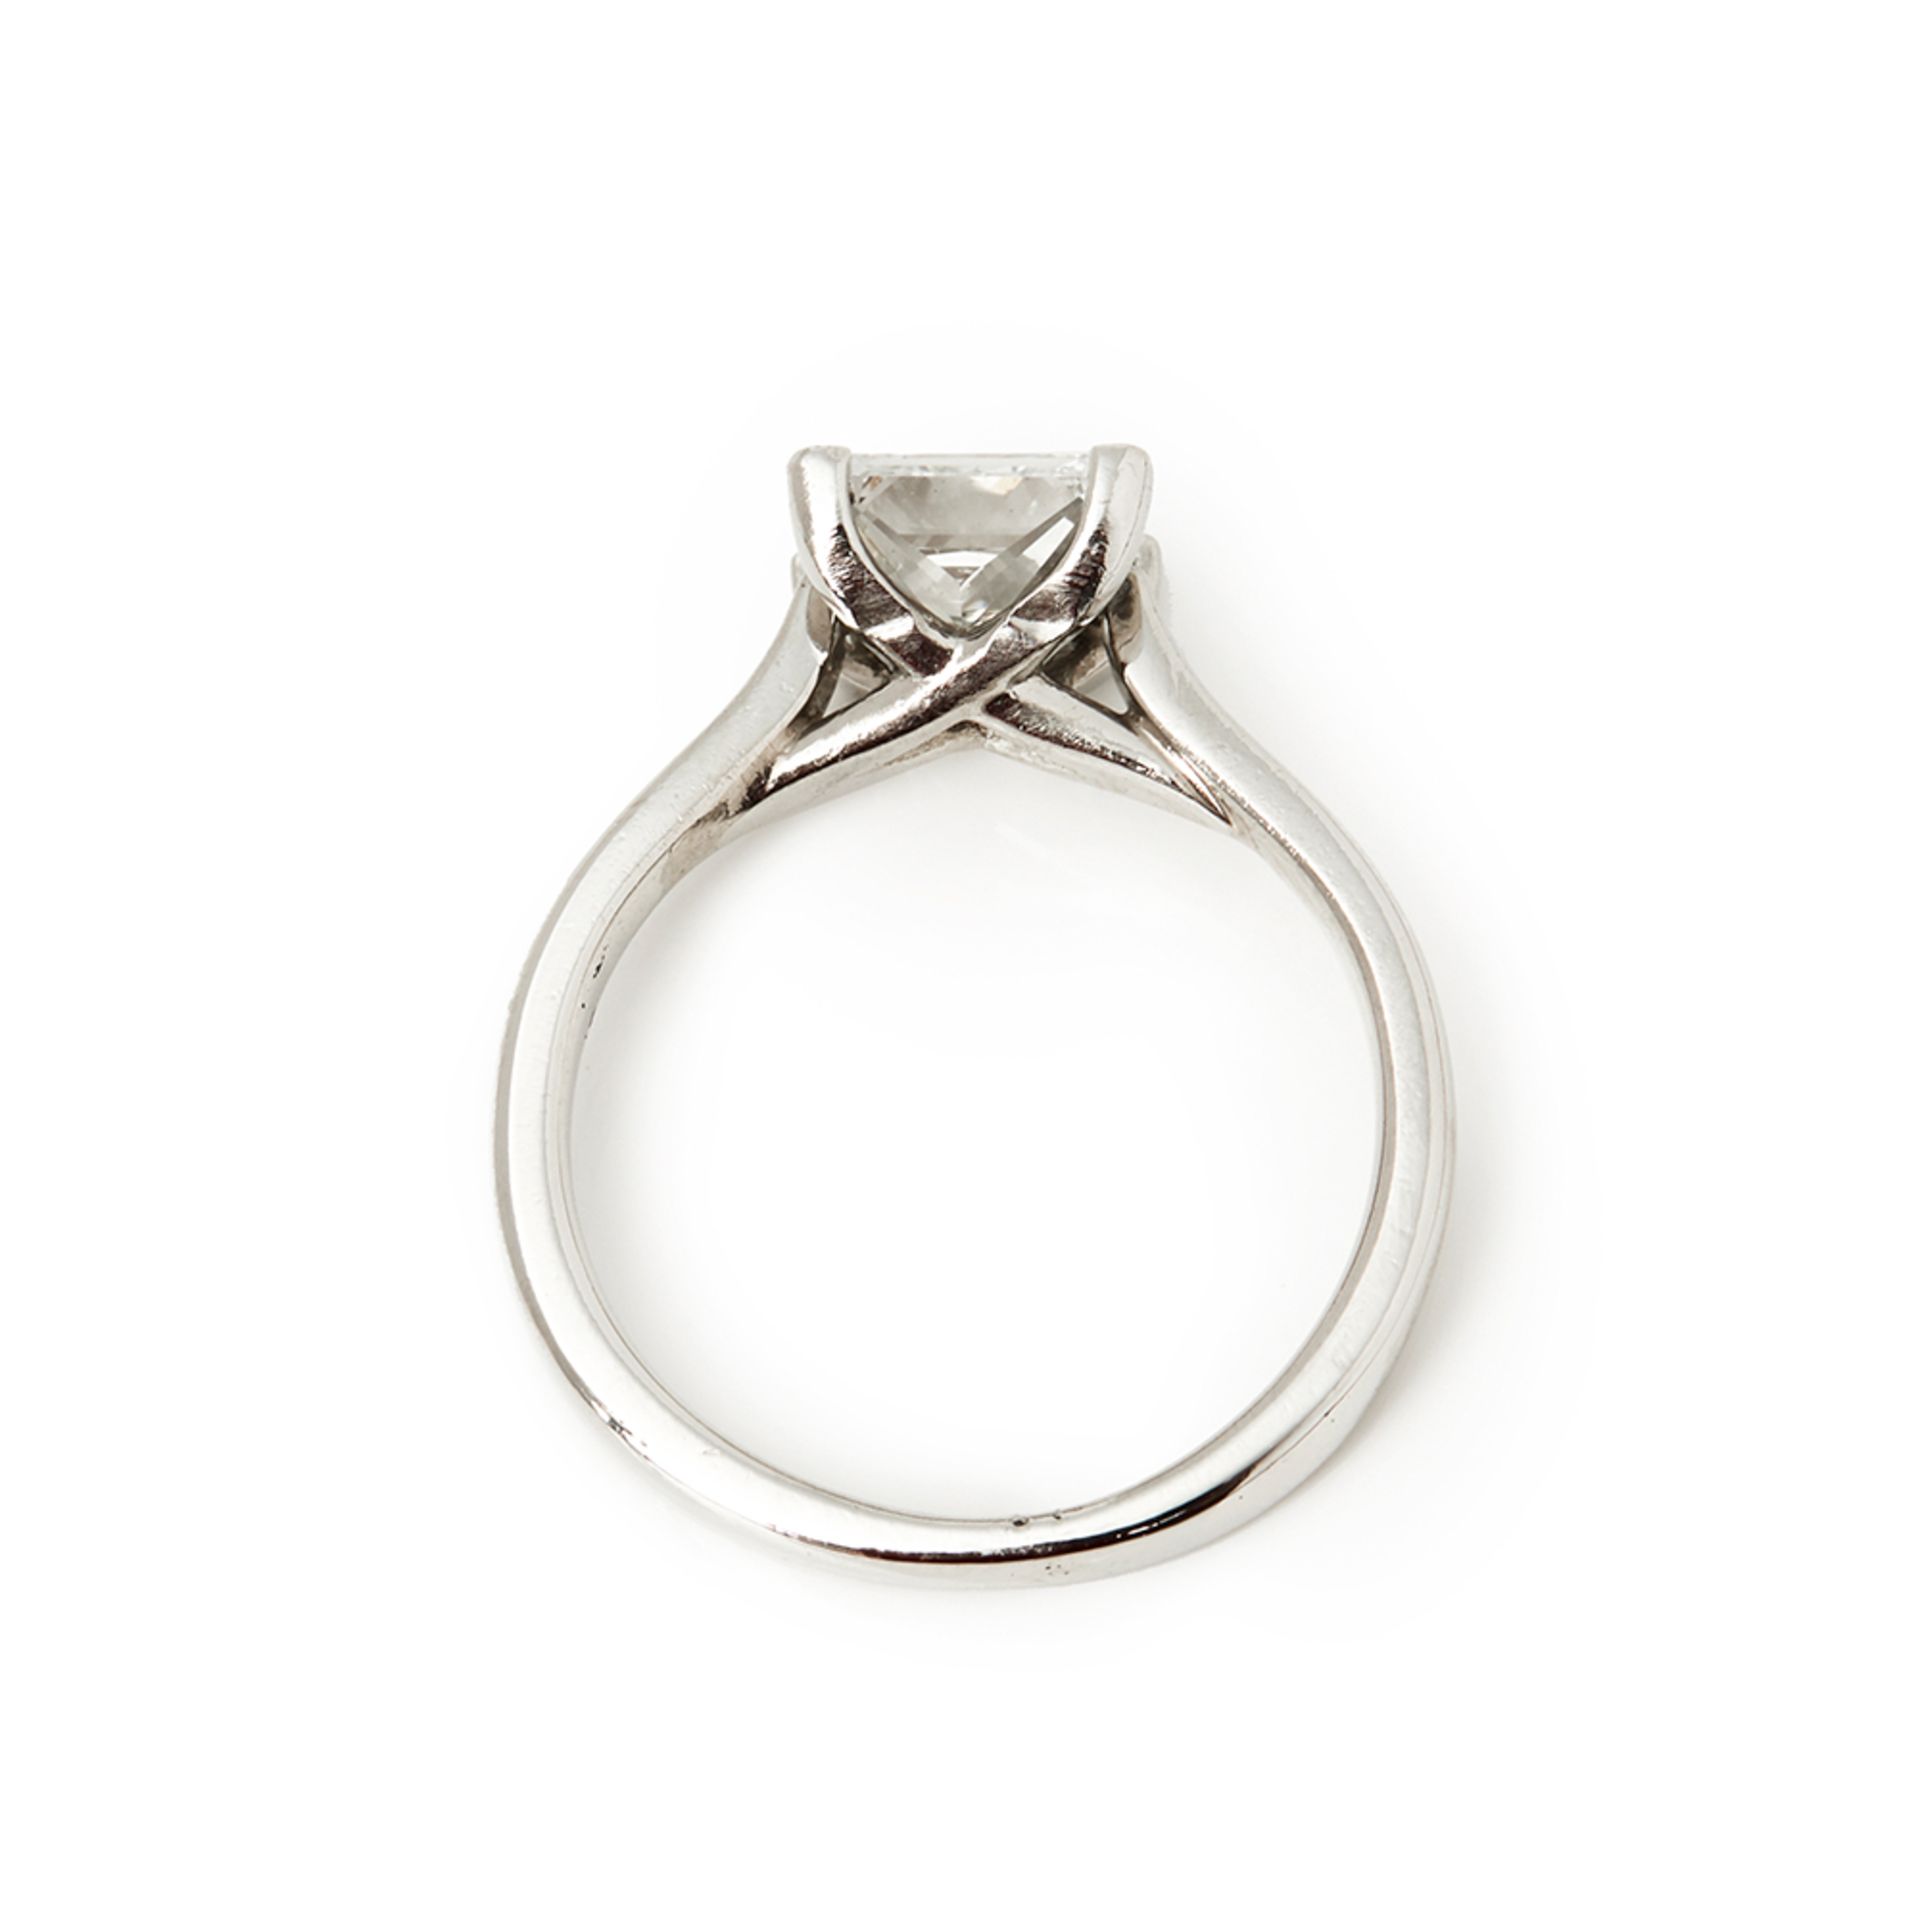 Platinum Princess Cut Diamond Solitaire Engagement Ring - Image 4 of 7